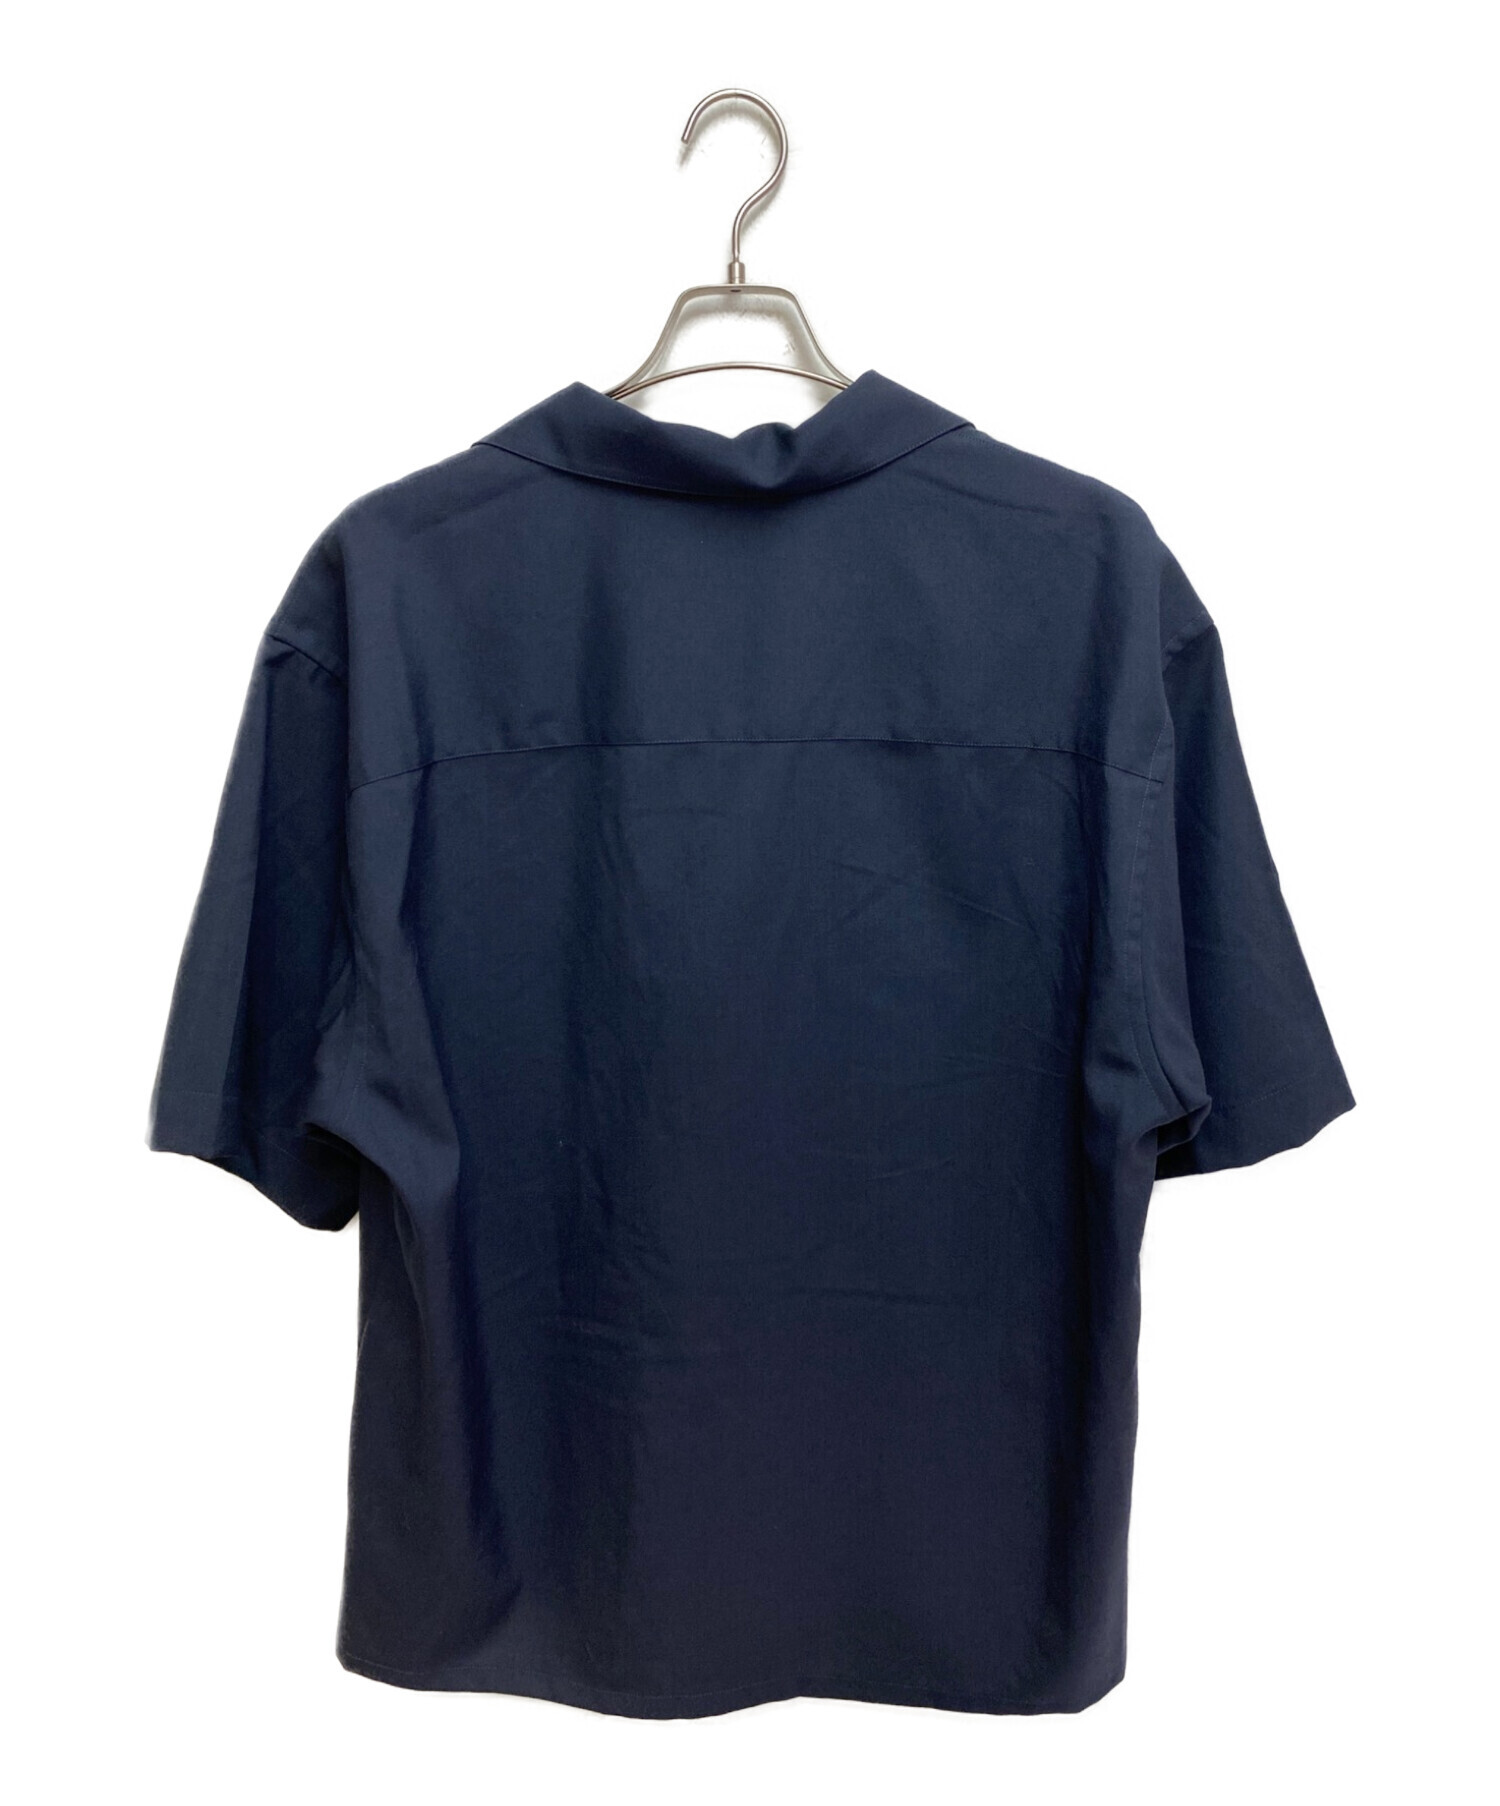 MARNI (マルニ) ロゴ刺繍ボーリングシャツ サイズ:50